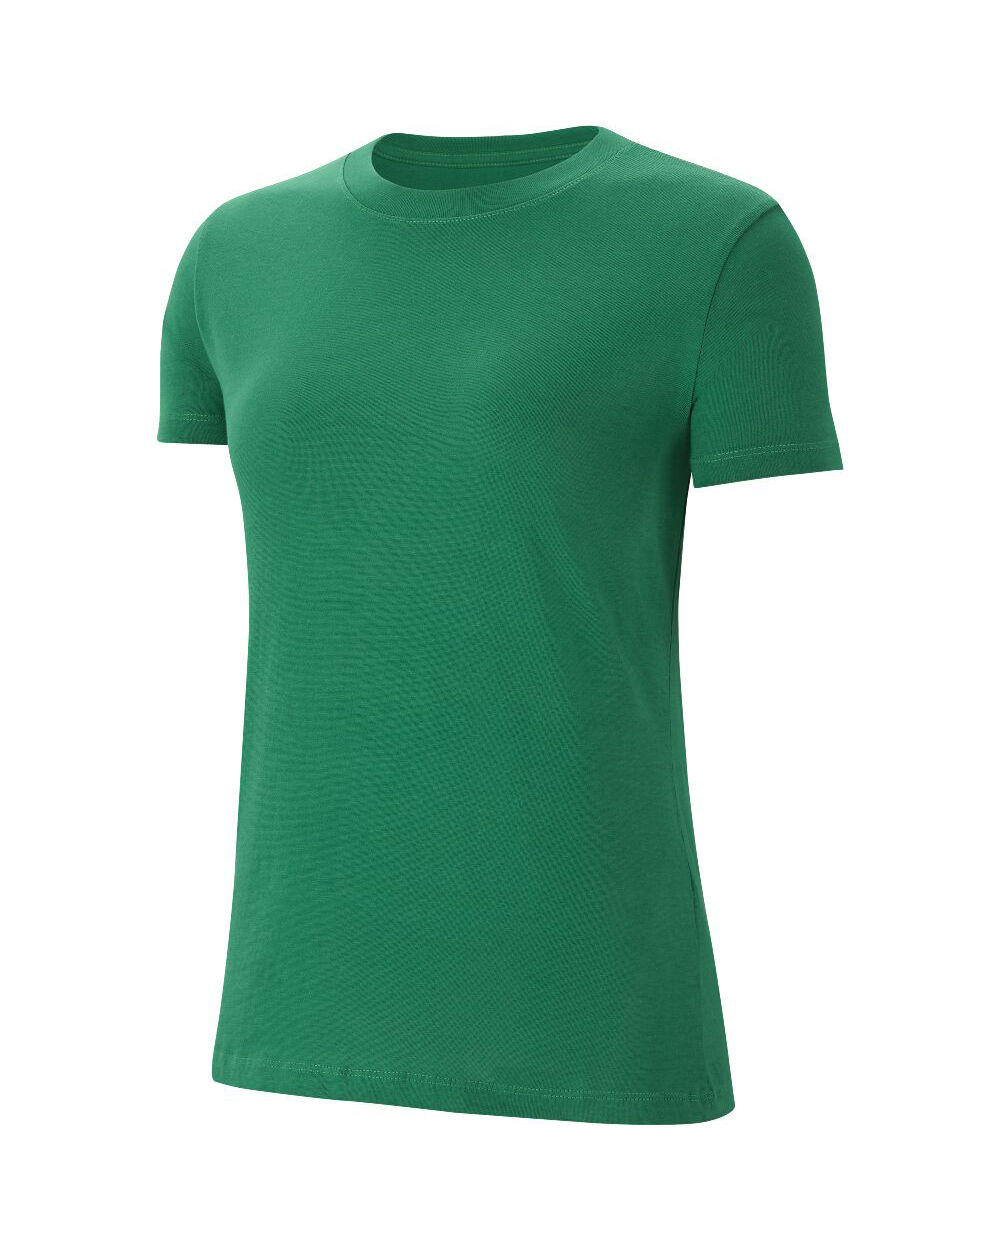 Camiseta Nike Team Club 20 Verde para Mujeres - CZ0903-302